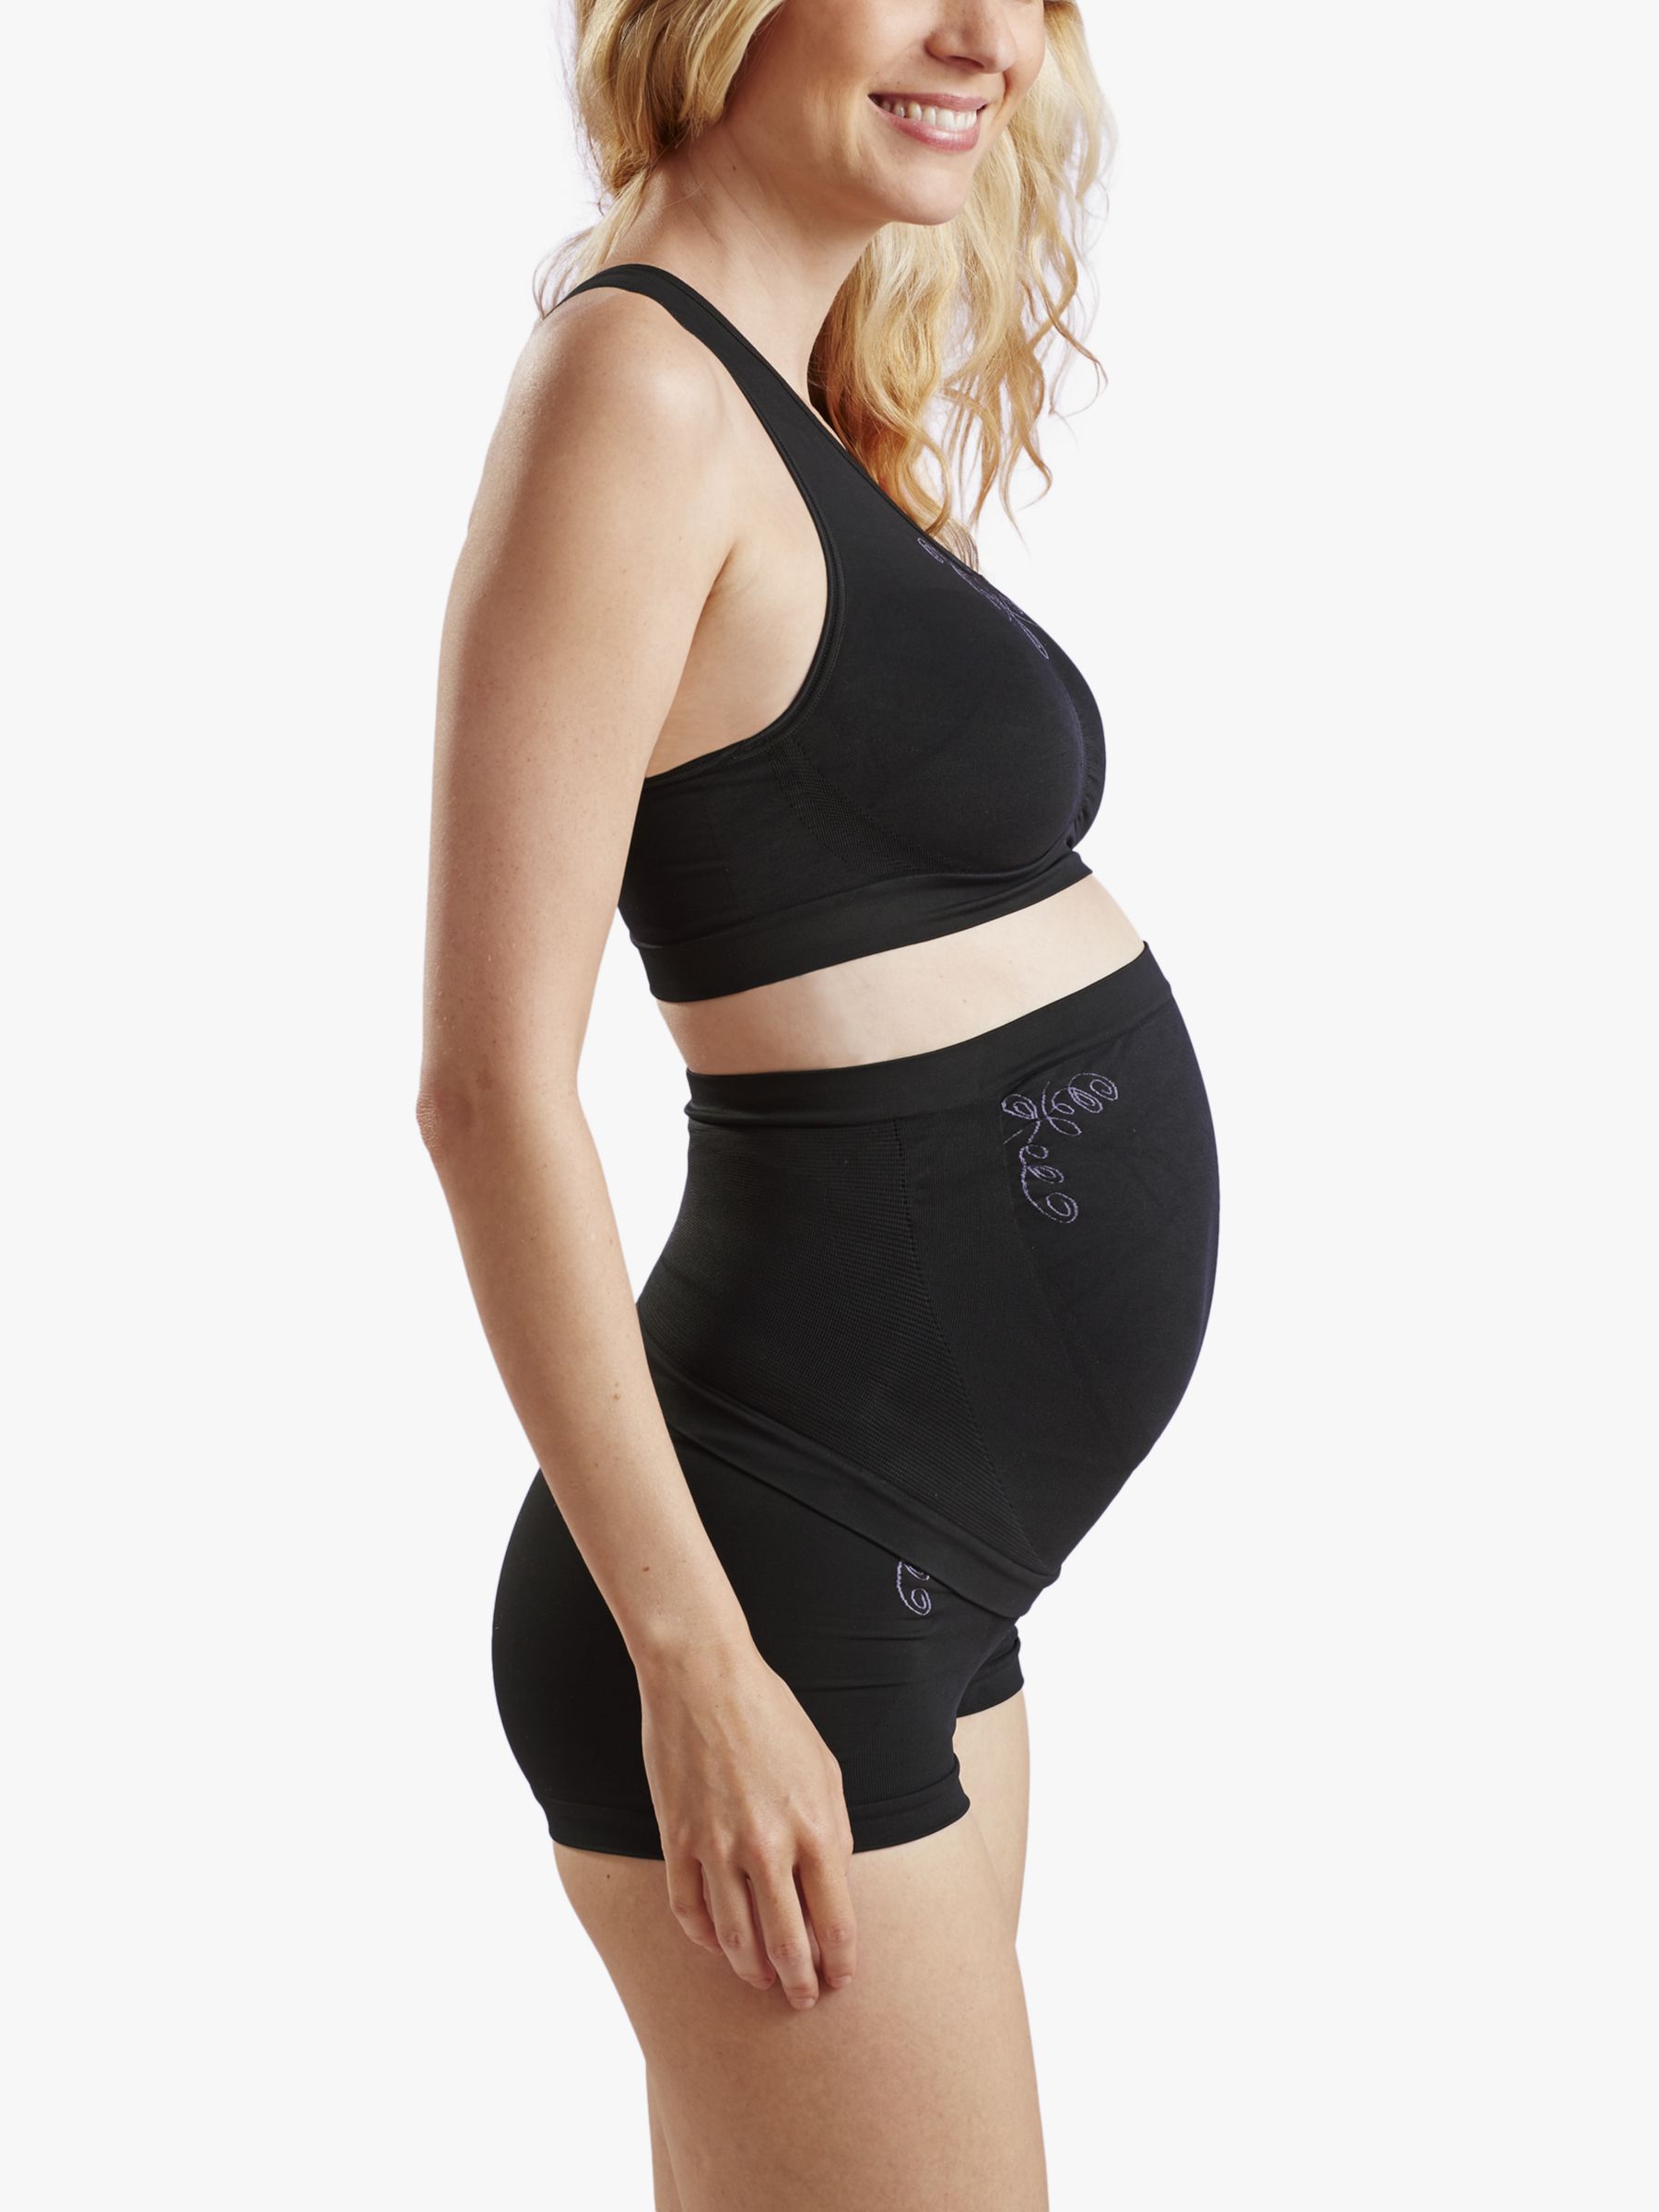 Buy Carefix Maternity Support Belt Online at johnlewis.com